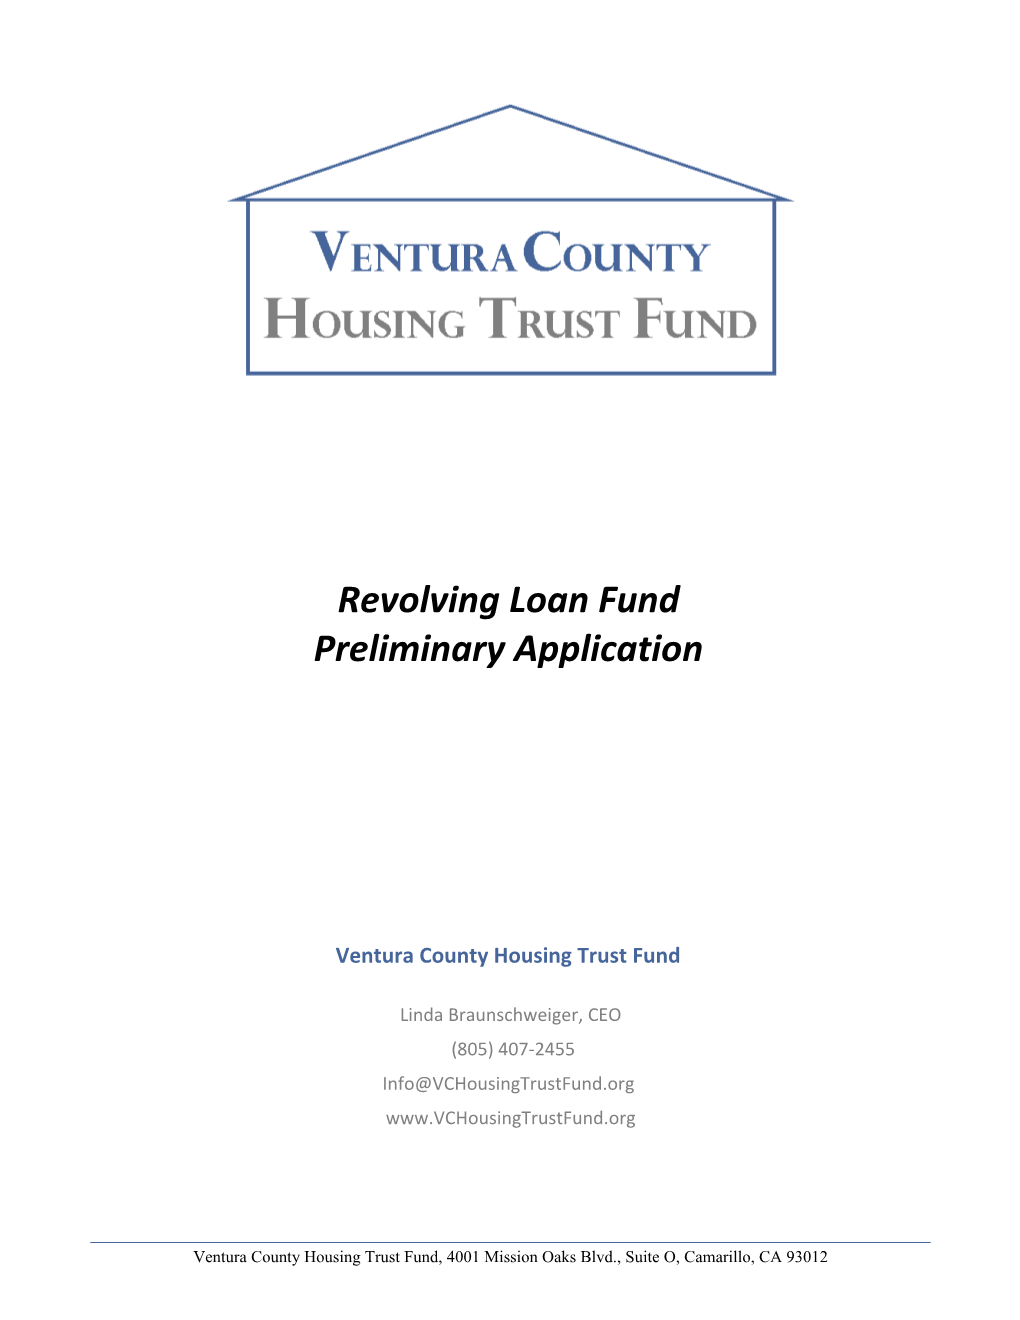 Ventura County Housing Trust Fund